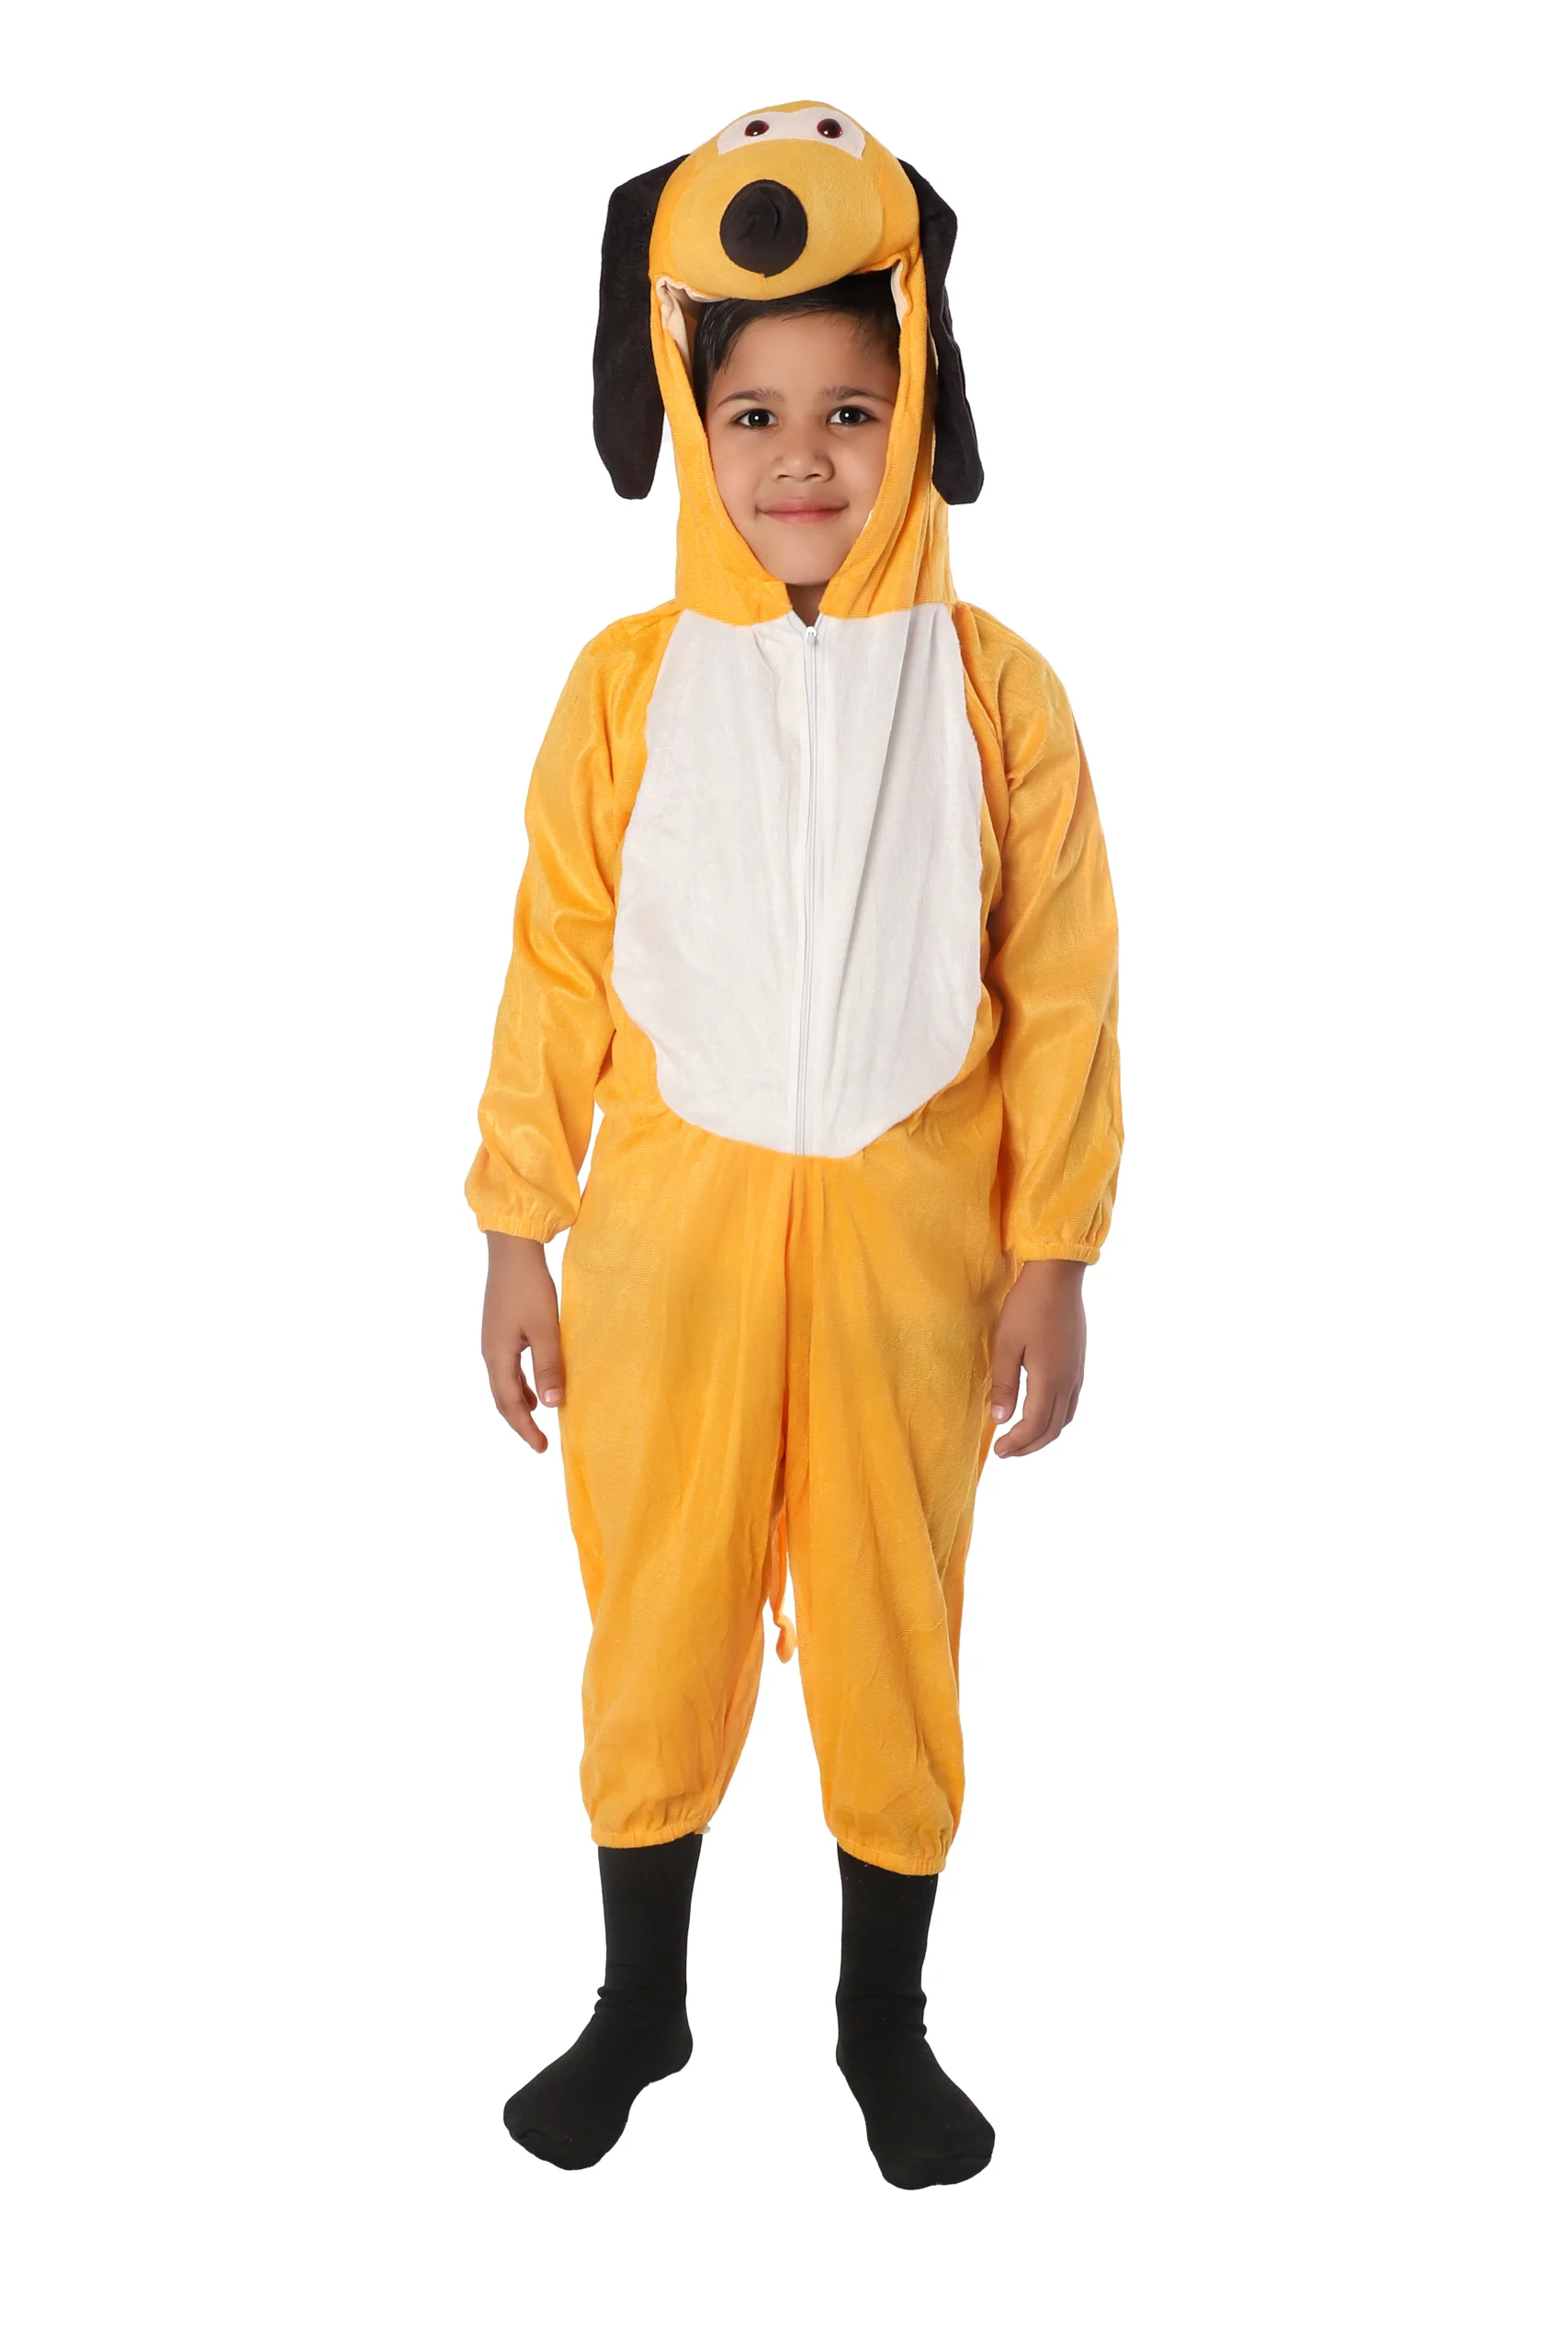 Grey Dog Costume For Kids, Animal Costumes